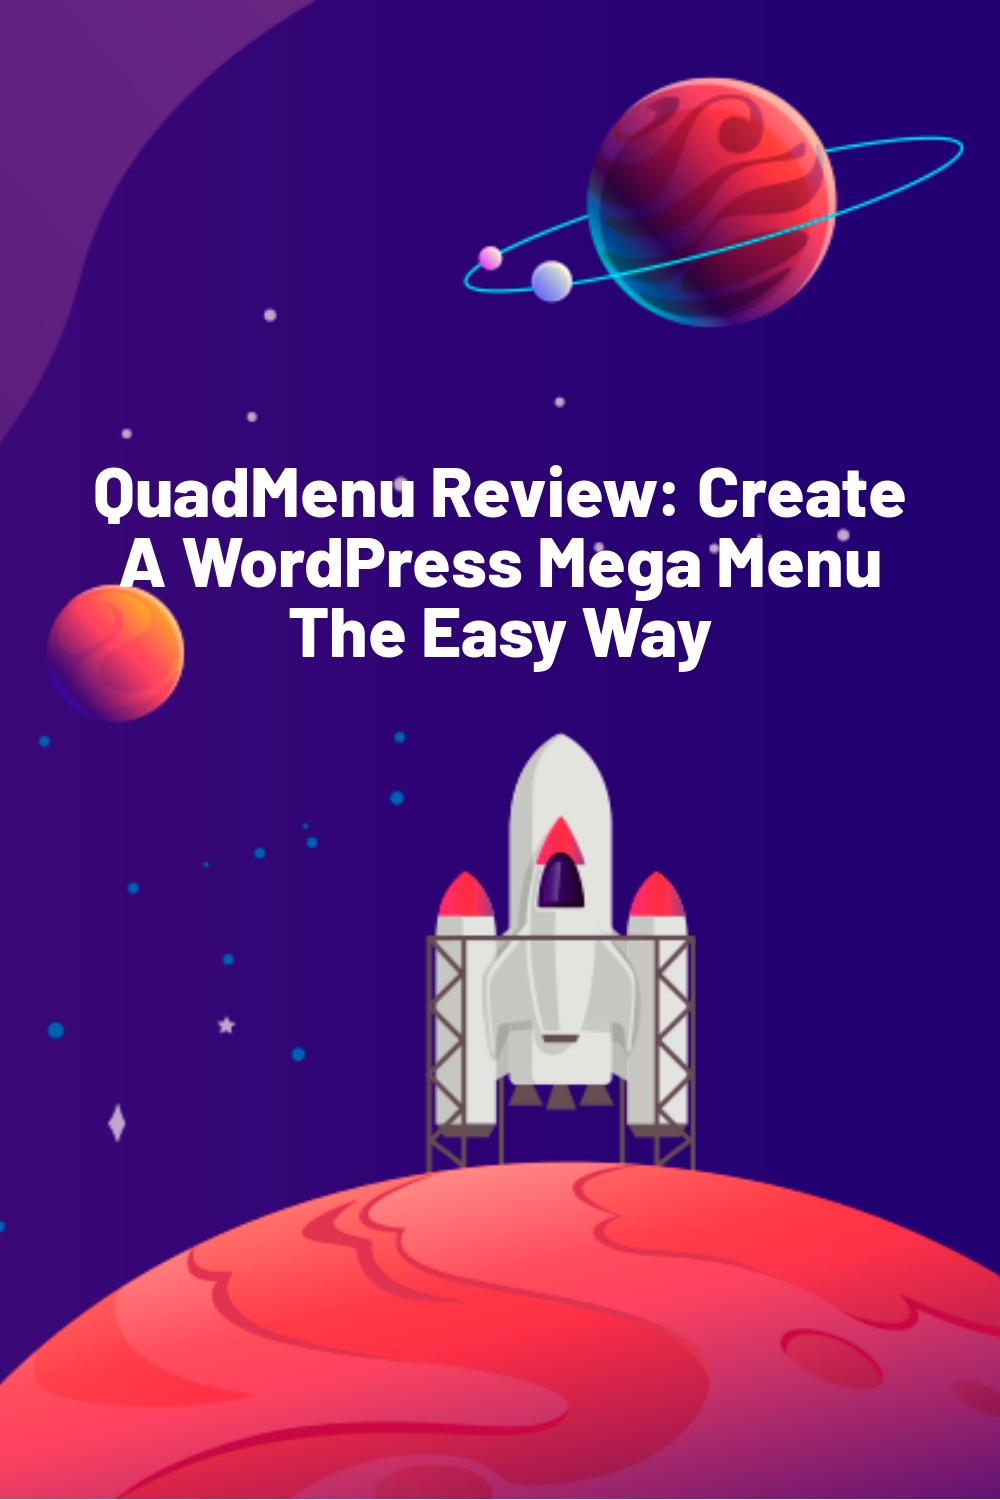 QuadMenu Review: Create A WordPress Mega Menu The Easy Way